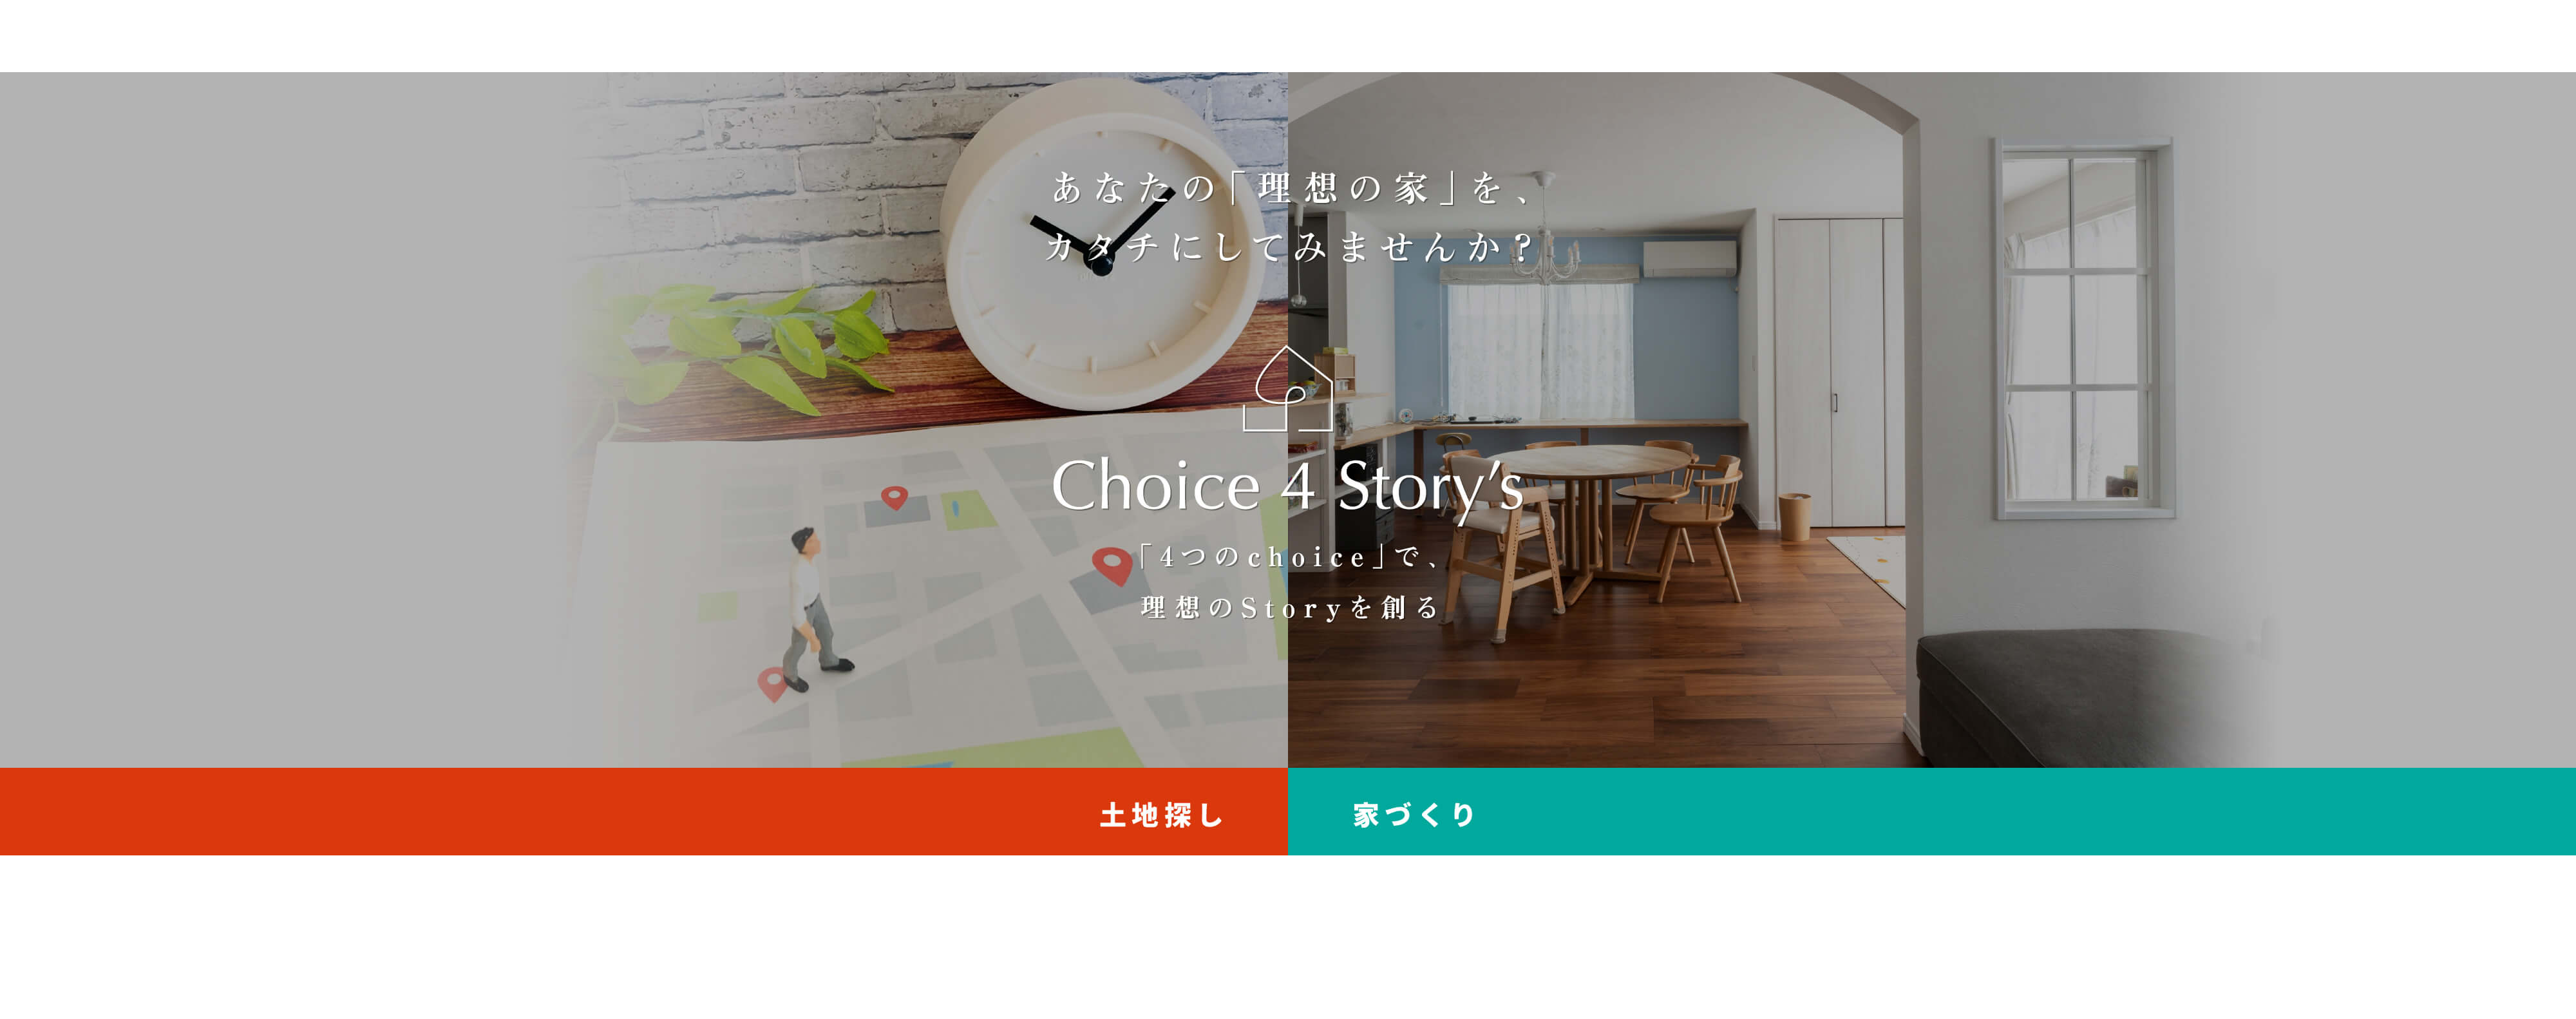 Choice 4 Story's